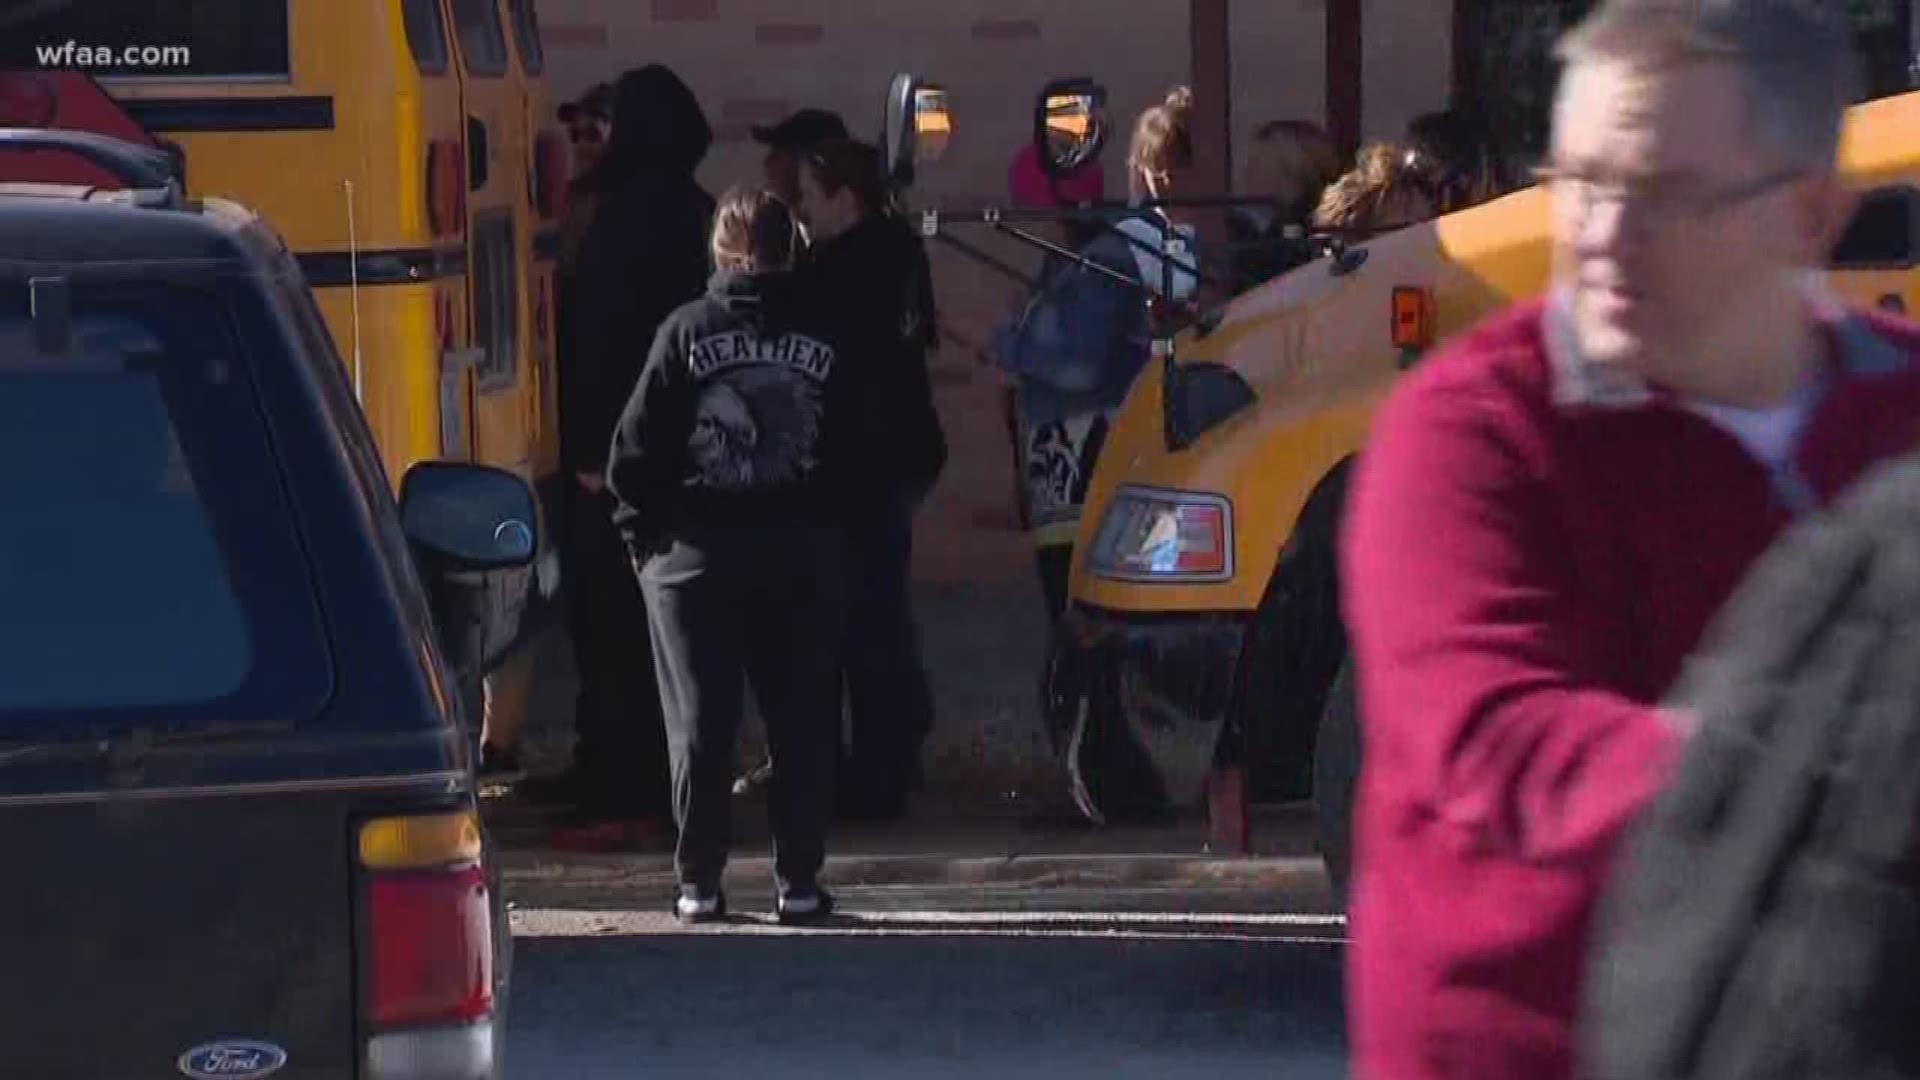 Italy school shooting: Students say suspect had violent past